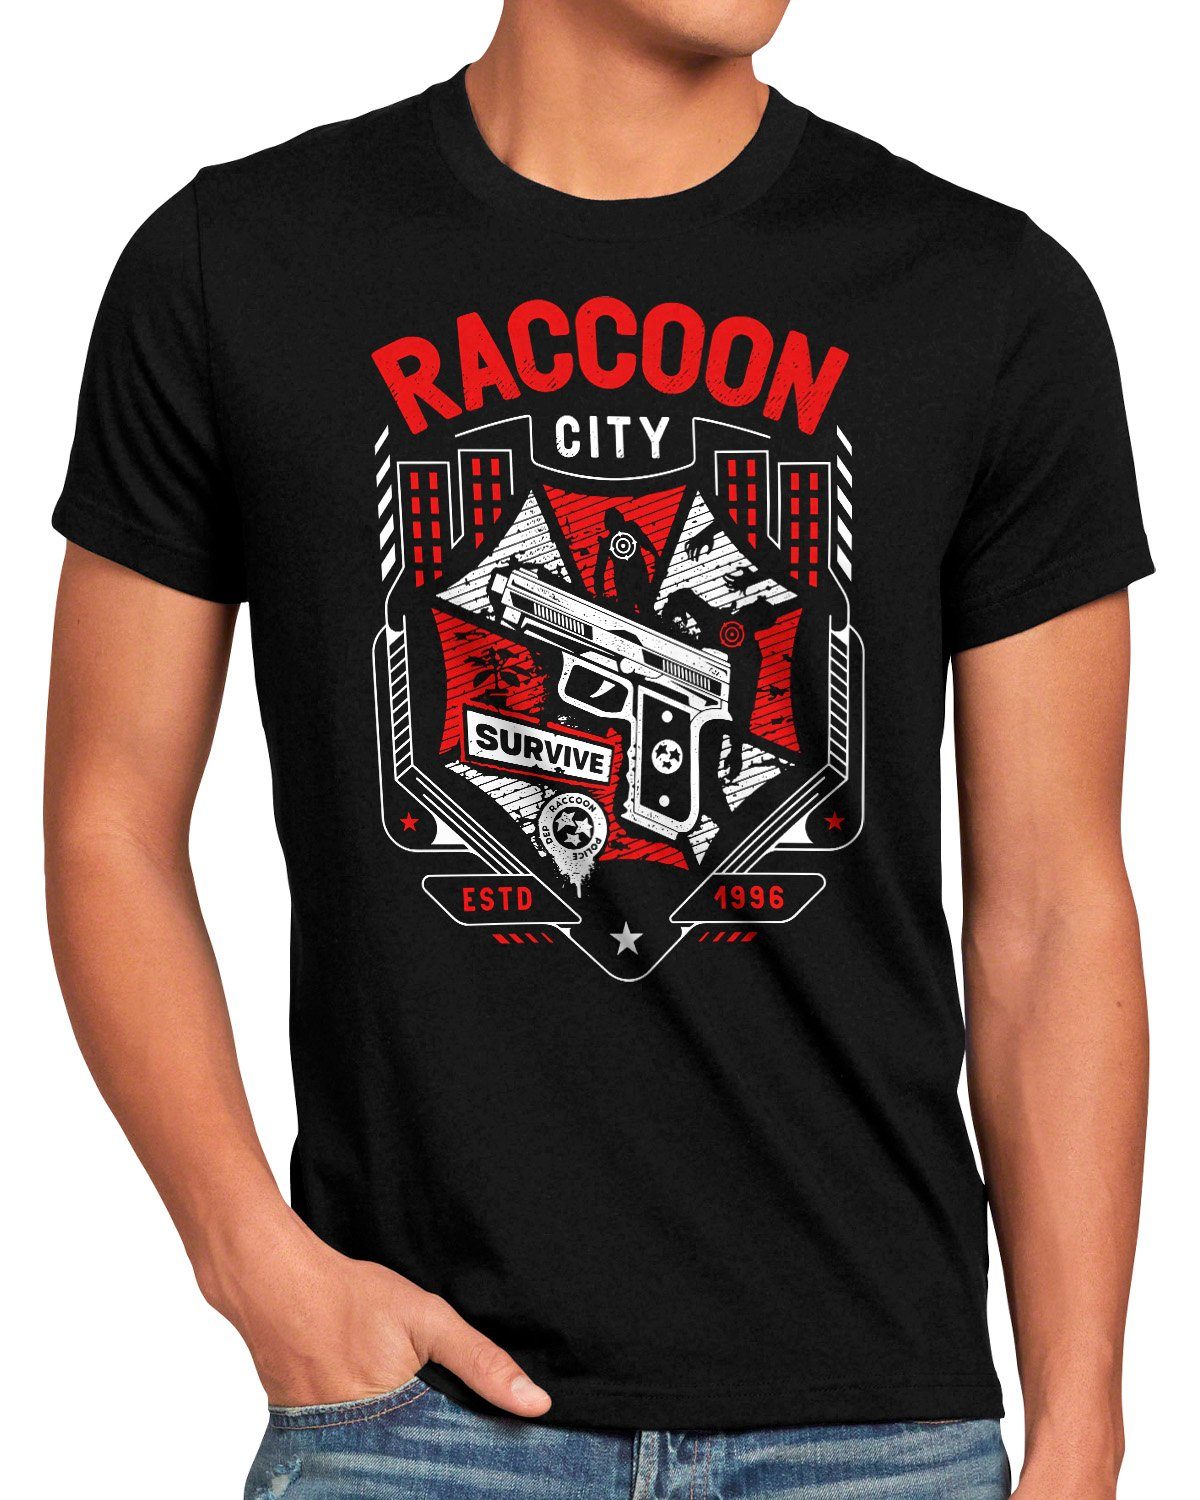 style3 corp umbrella Print-Shirt evil Raccoon City virus zombie resident T-Shirt Herren